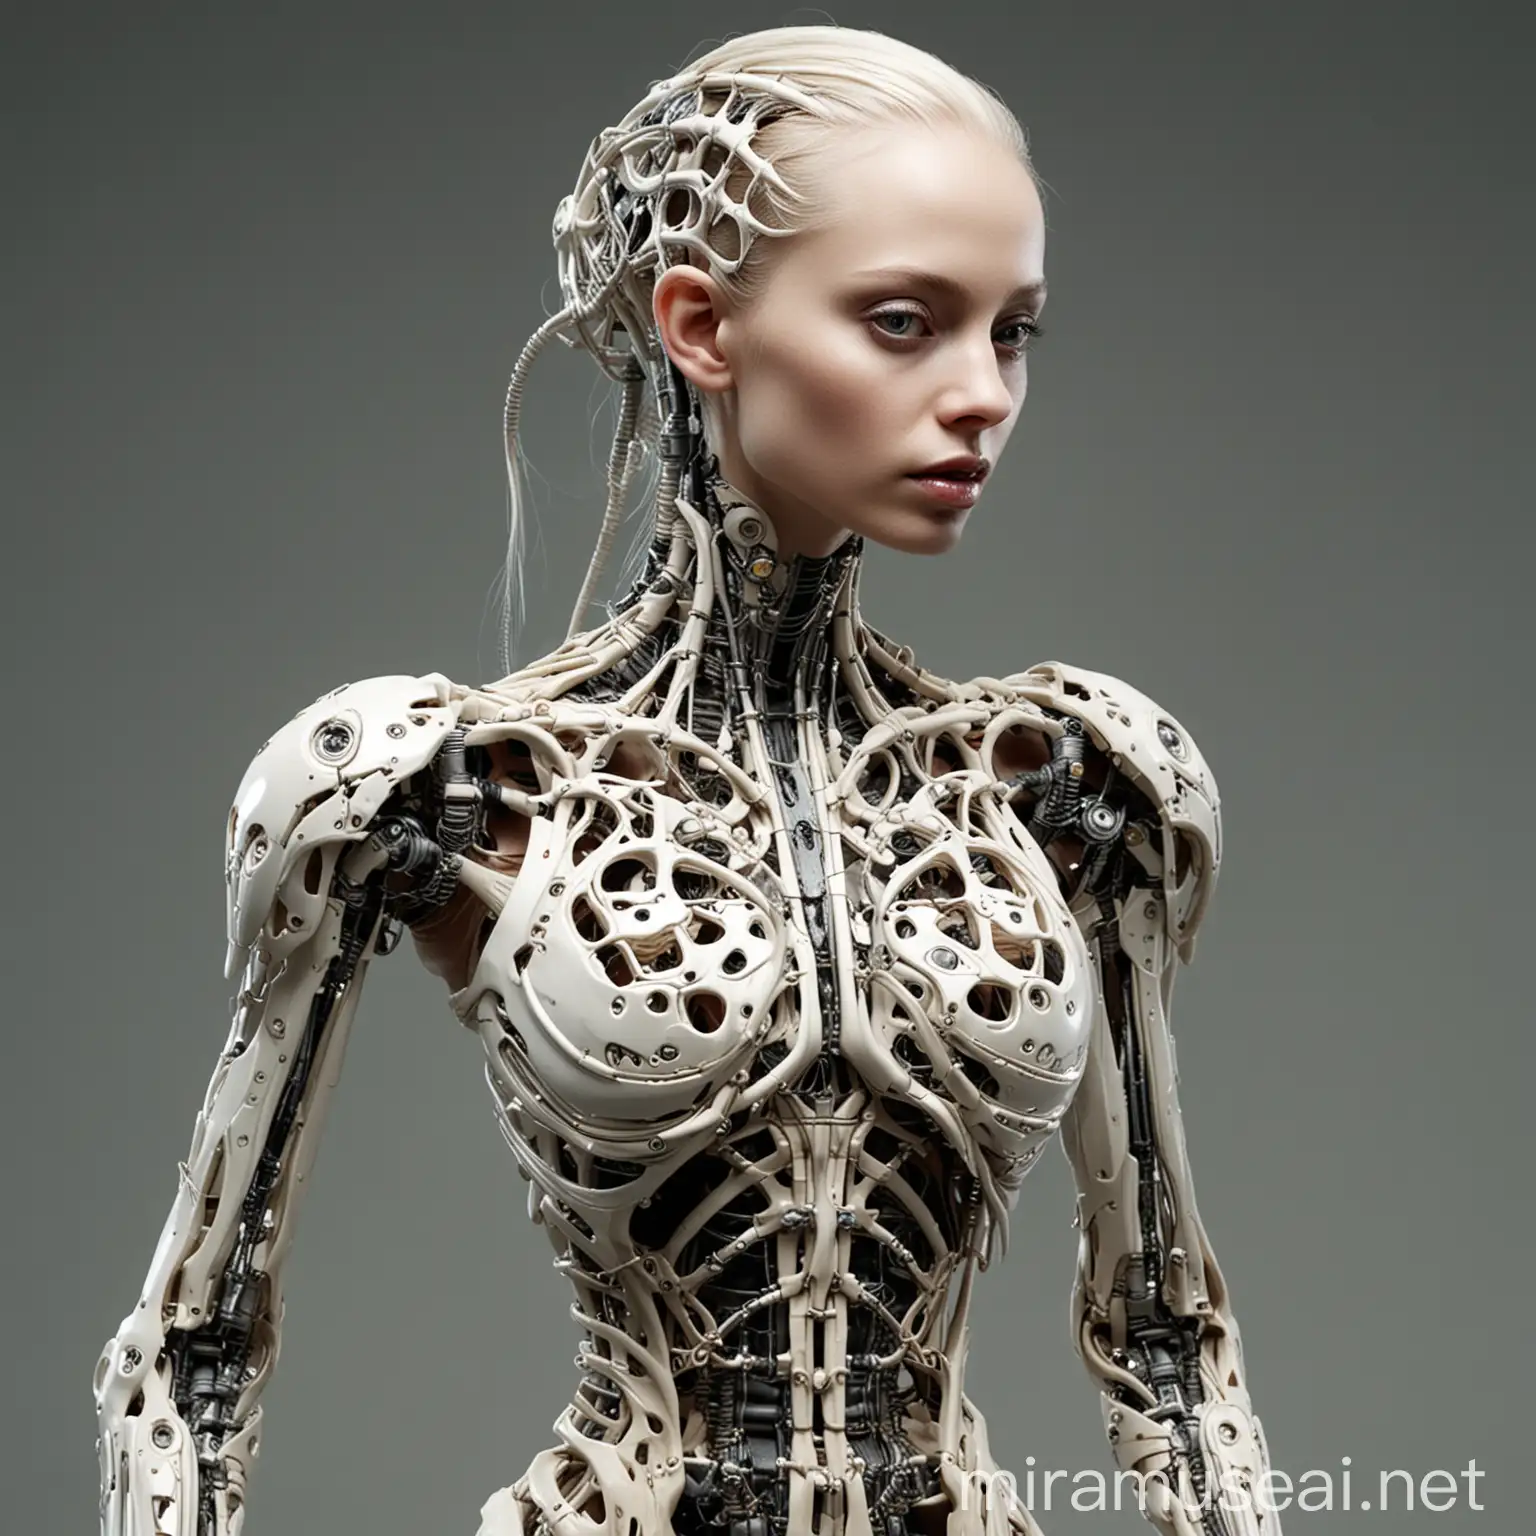 Biomechanical Xenomorph Female Fashion Garment with Organic Exoskeleton